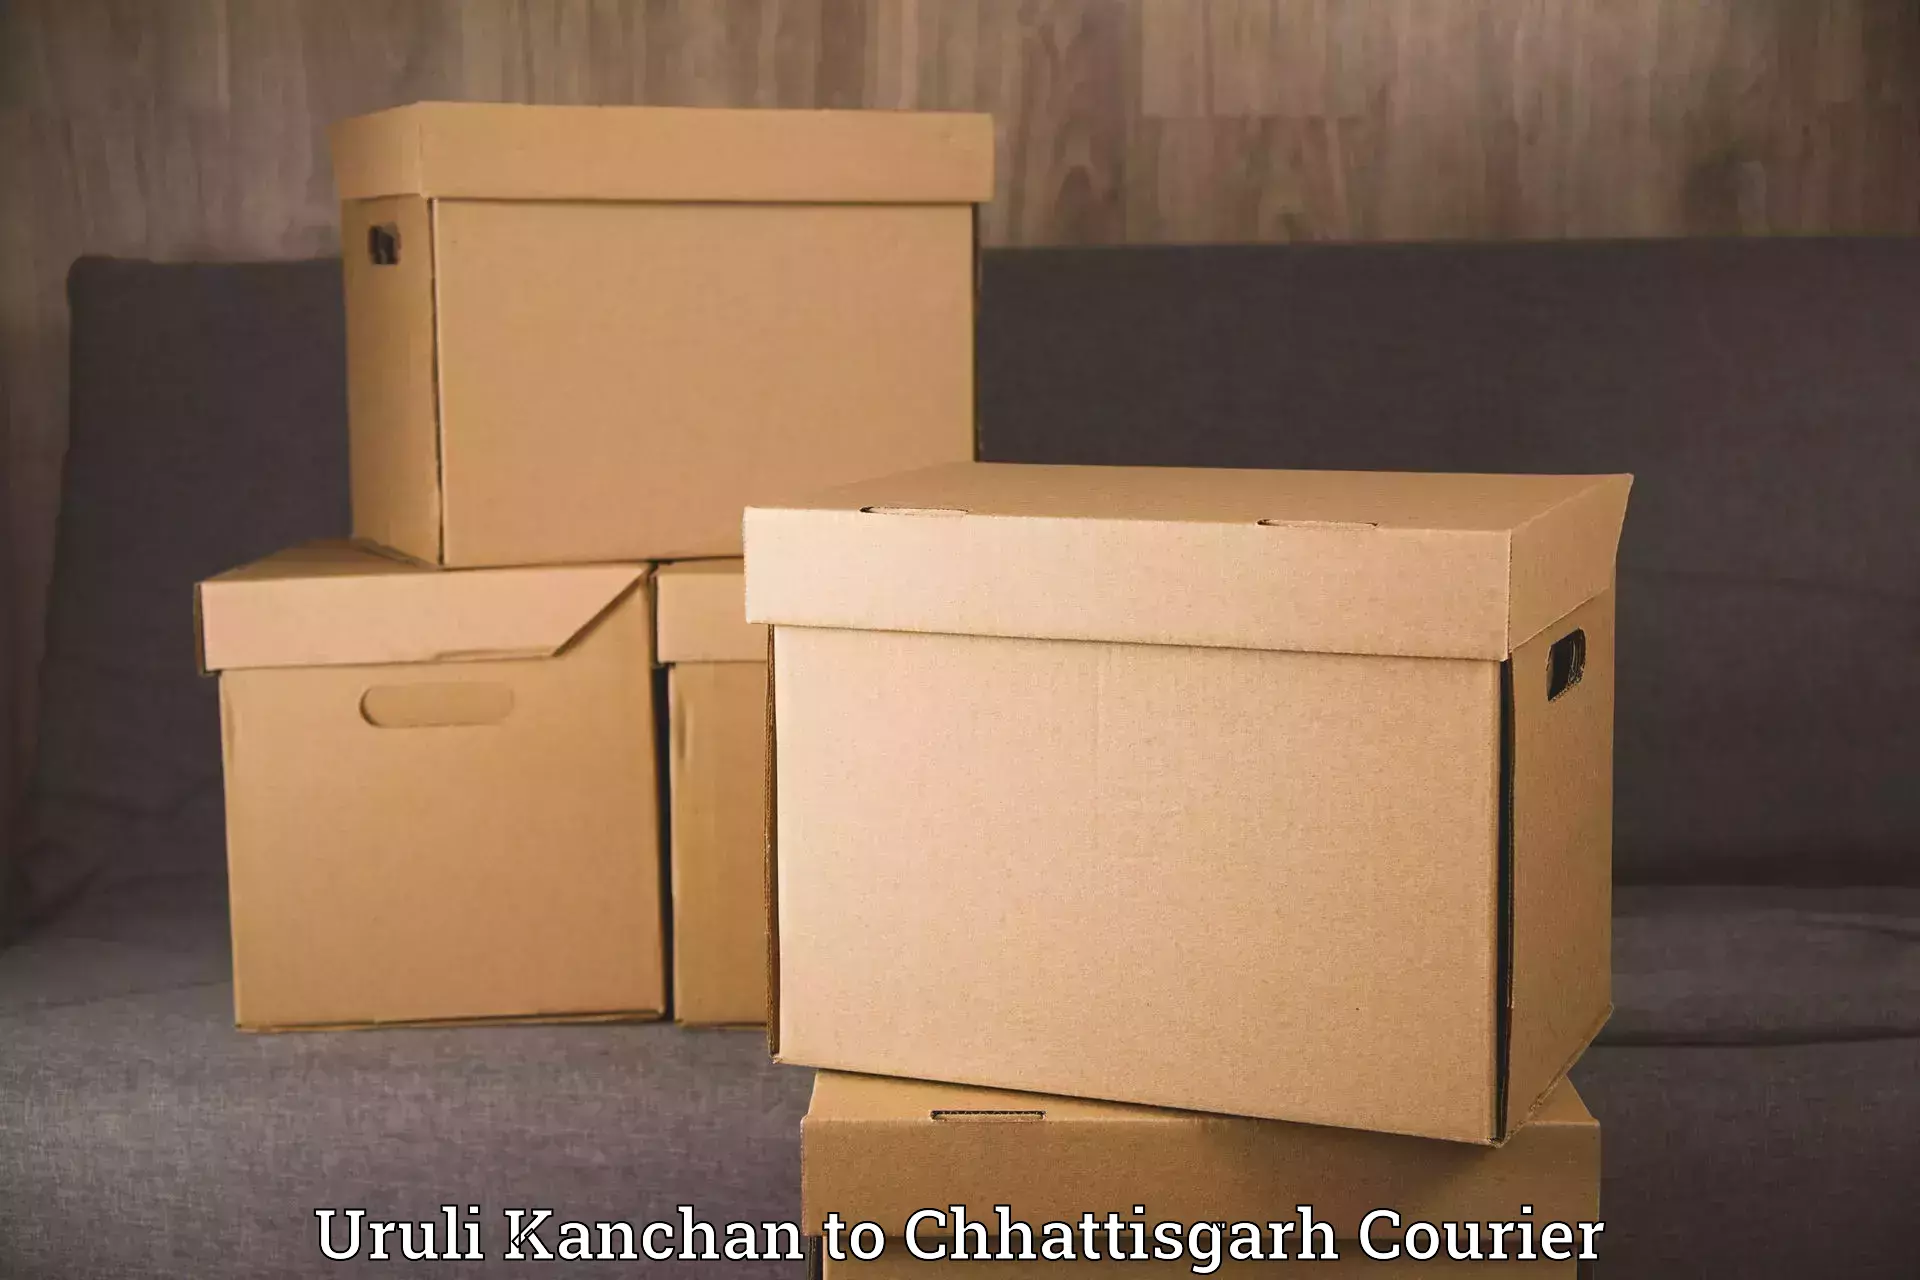 Trusted moving company Uruli Kanchan to Korea Chhattisgarh